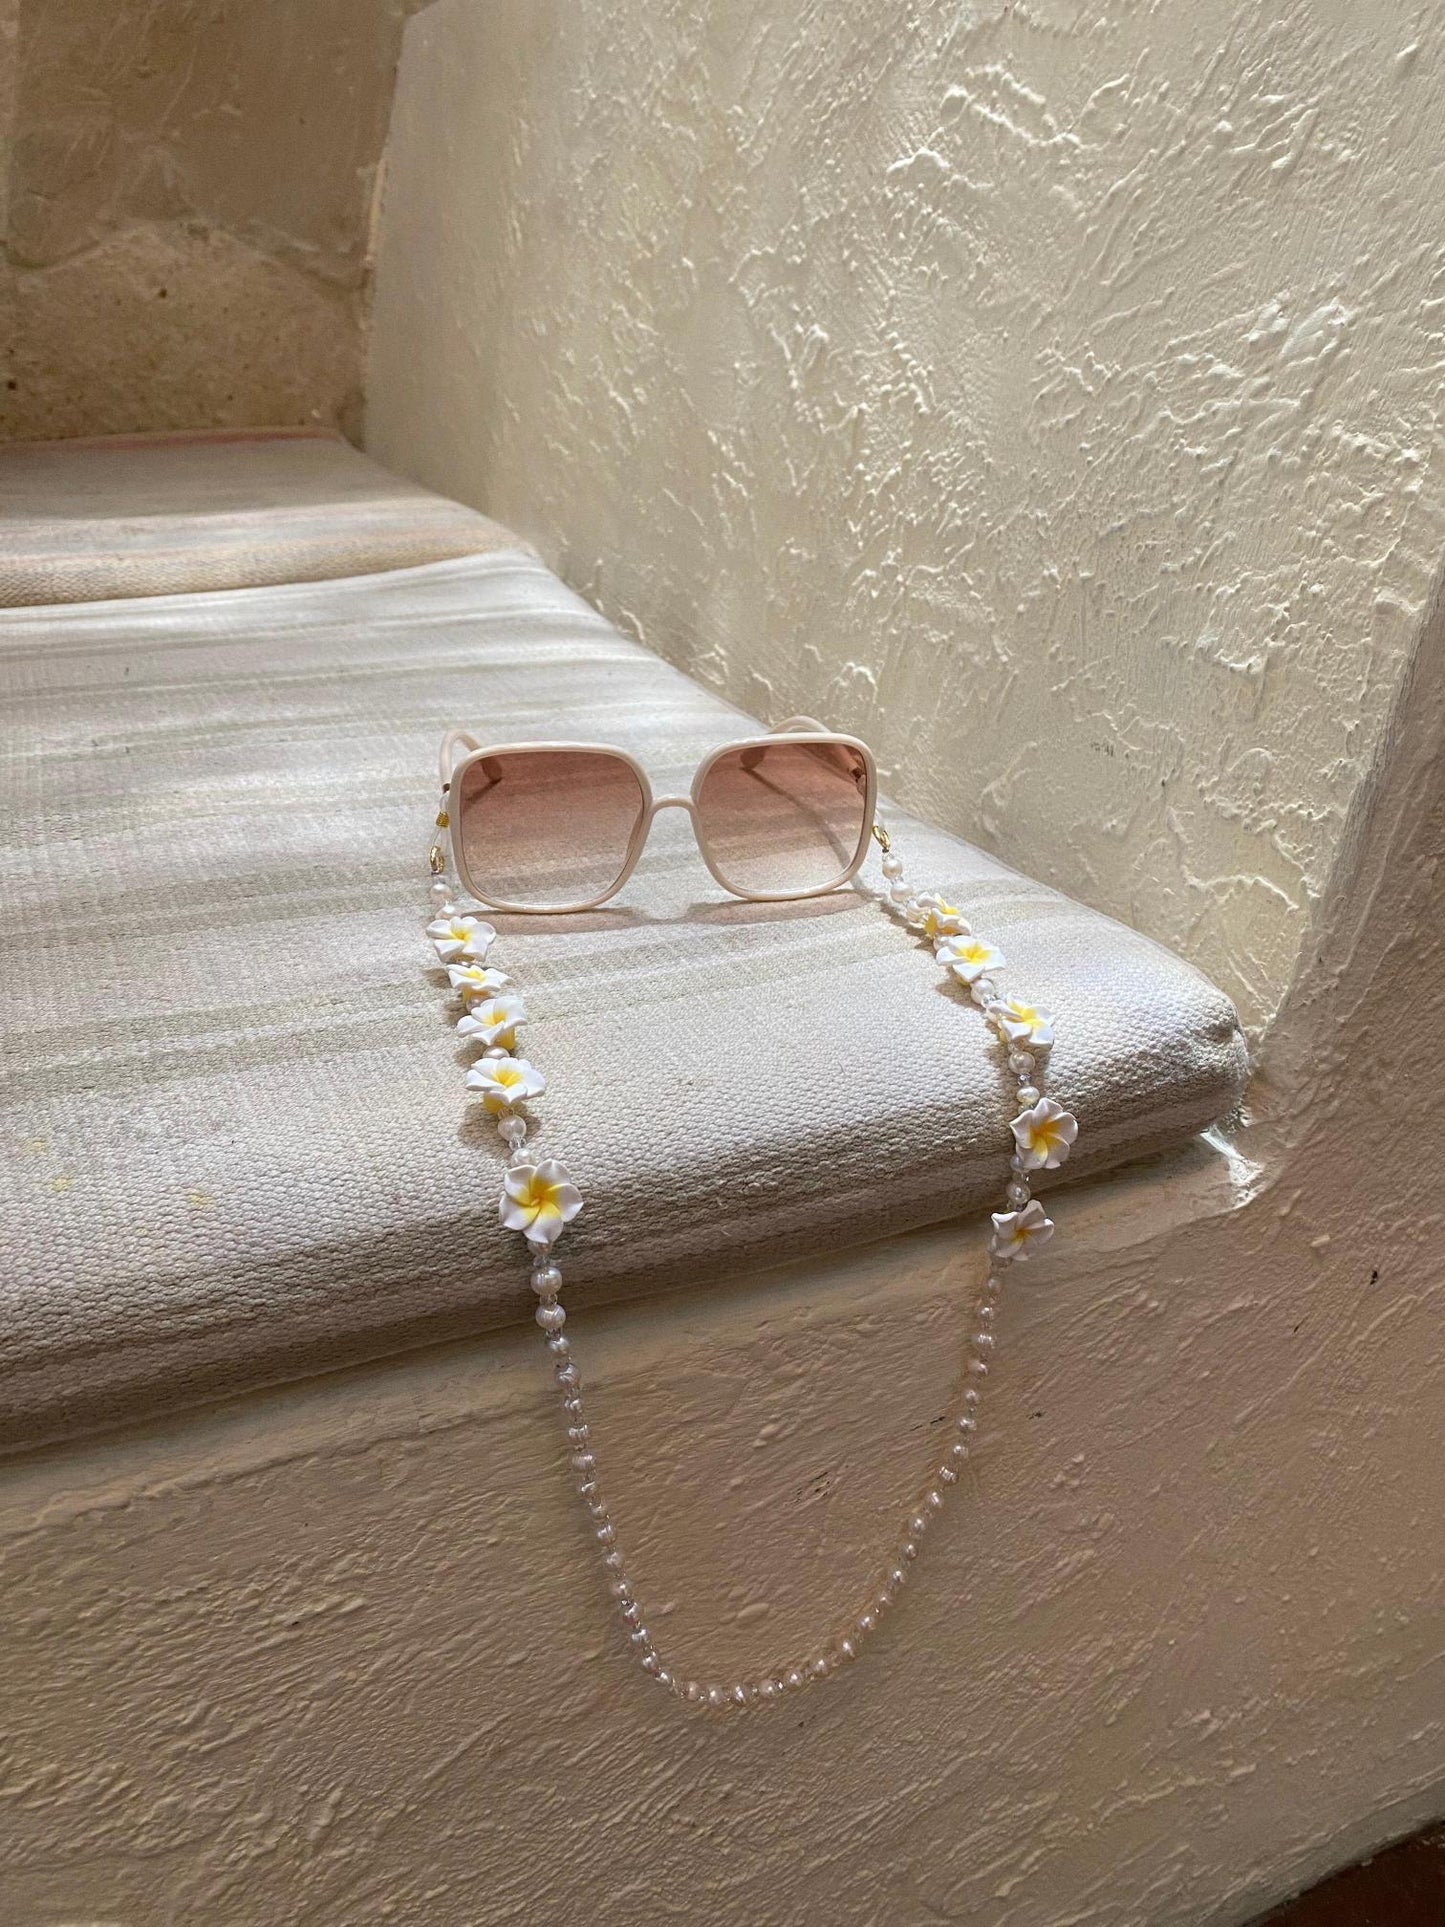 NEW Manor Glasses Chain